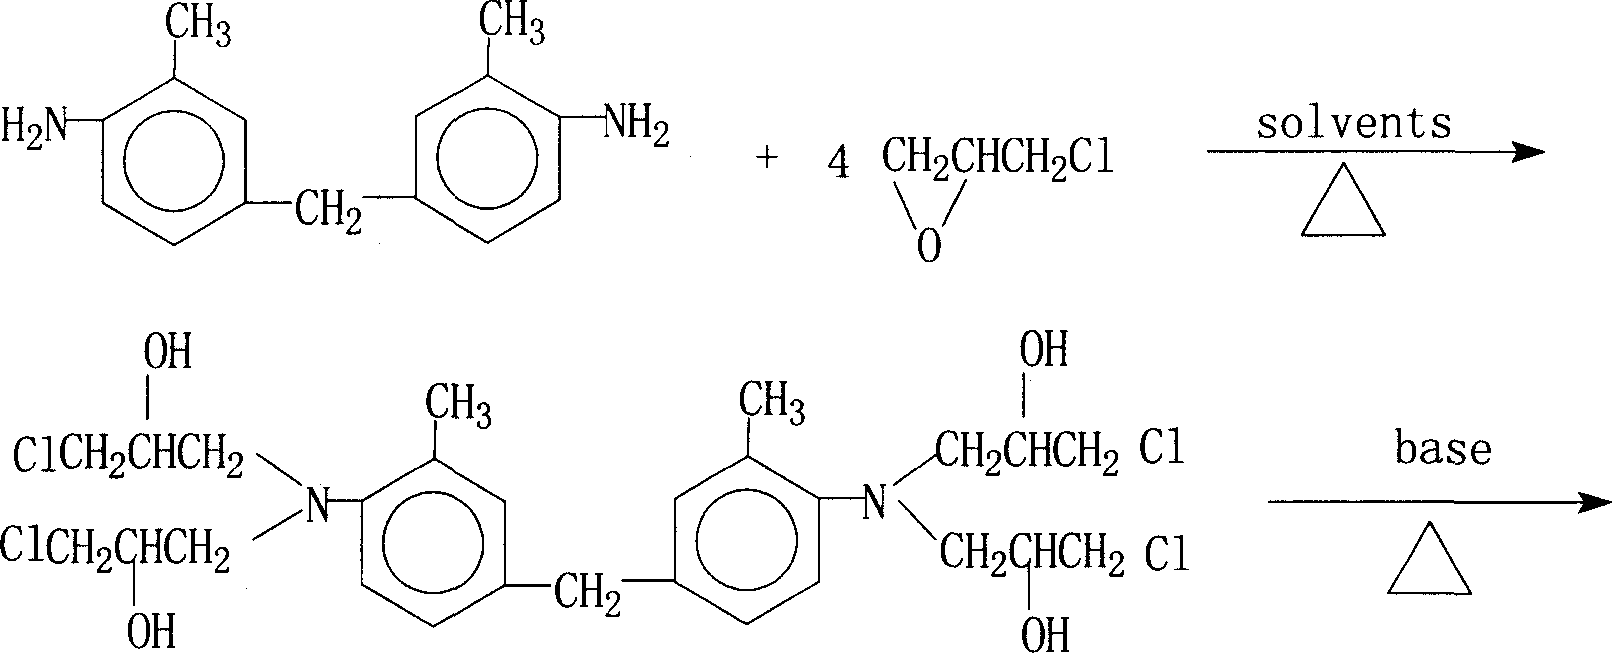 Process for preparing glycidic amine type polyfunctional epoxy resin